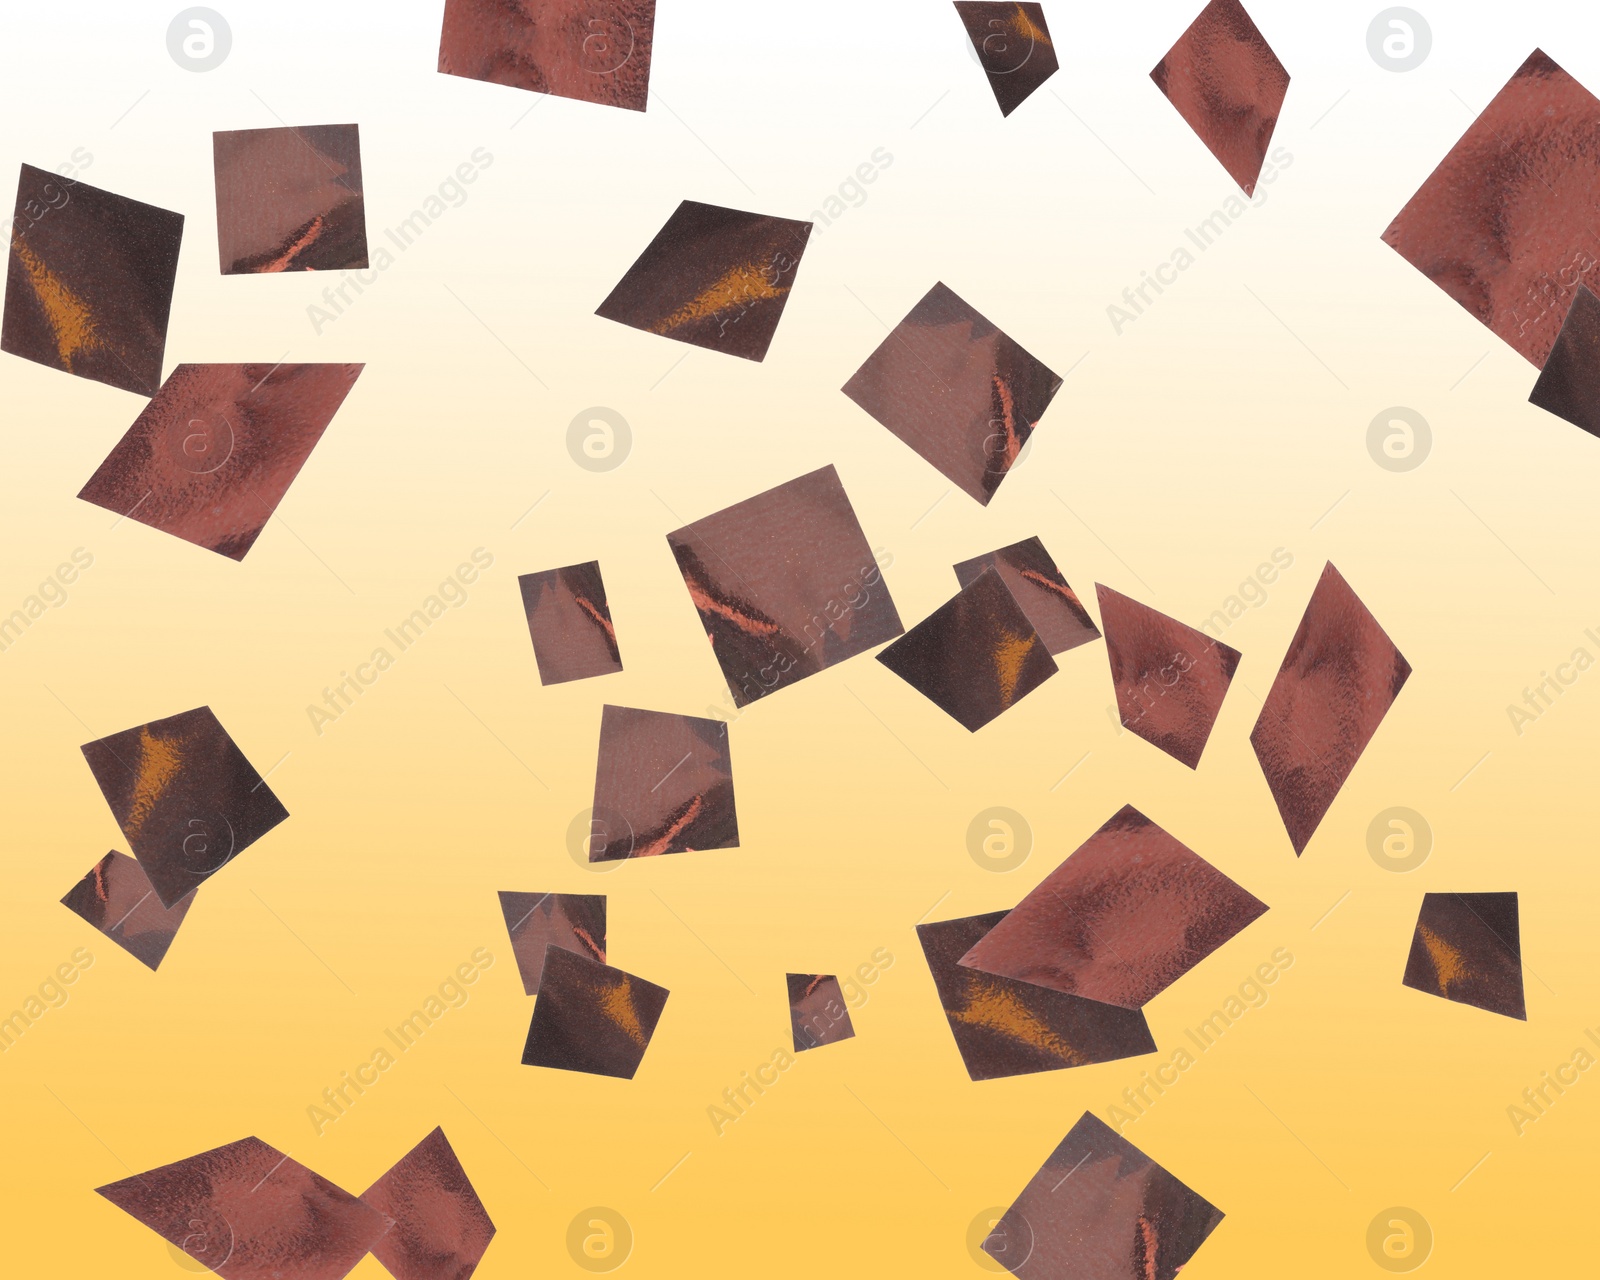 Image of Shiny bronze confetti falling on gradient orange background